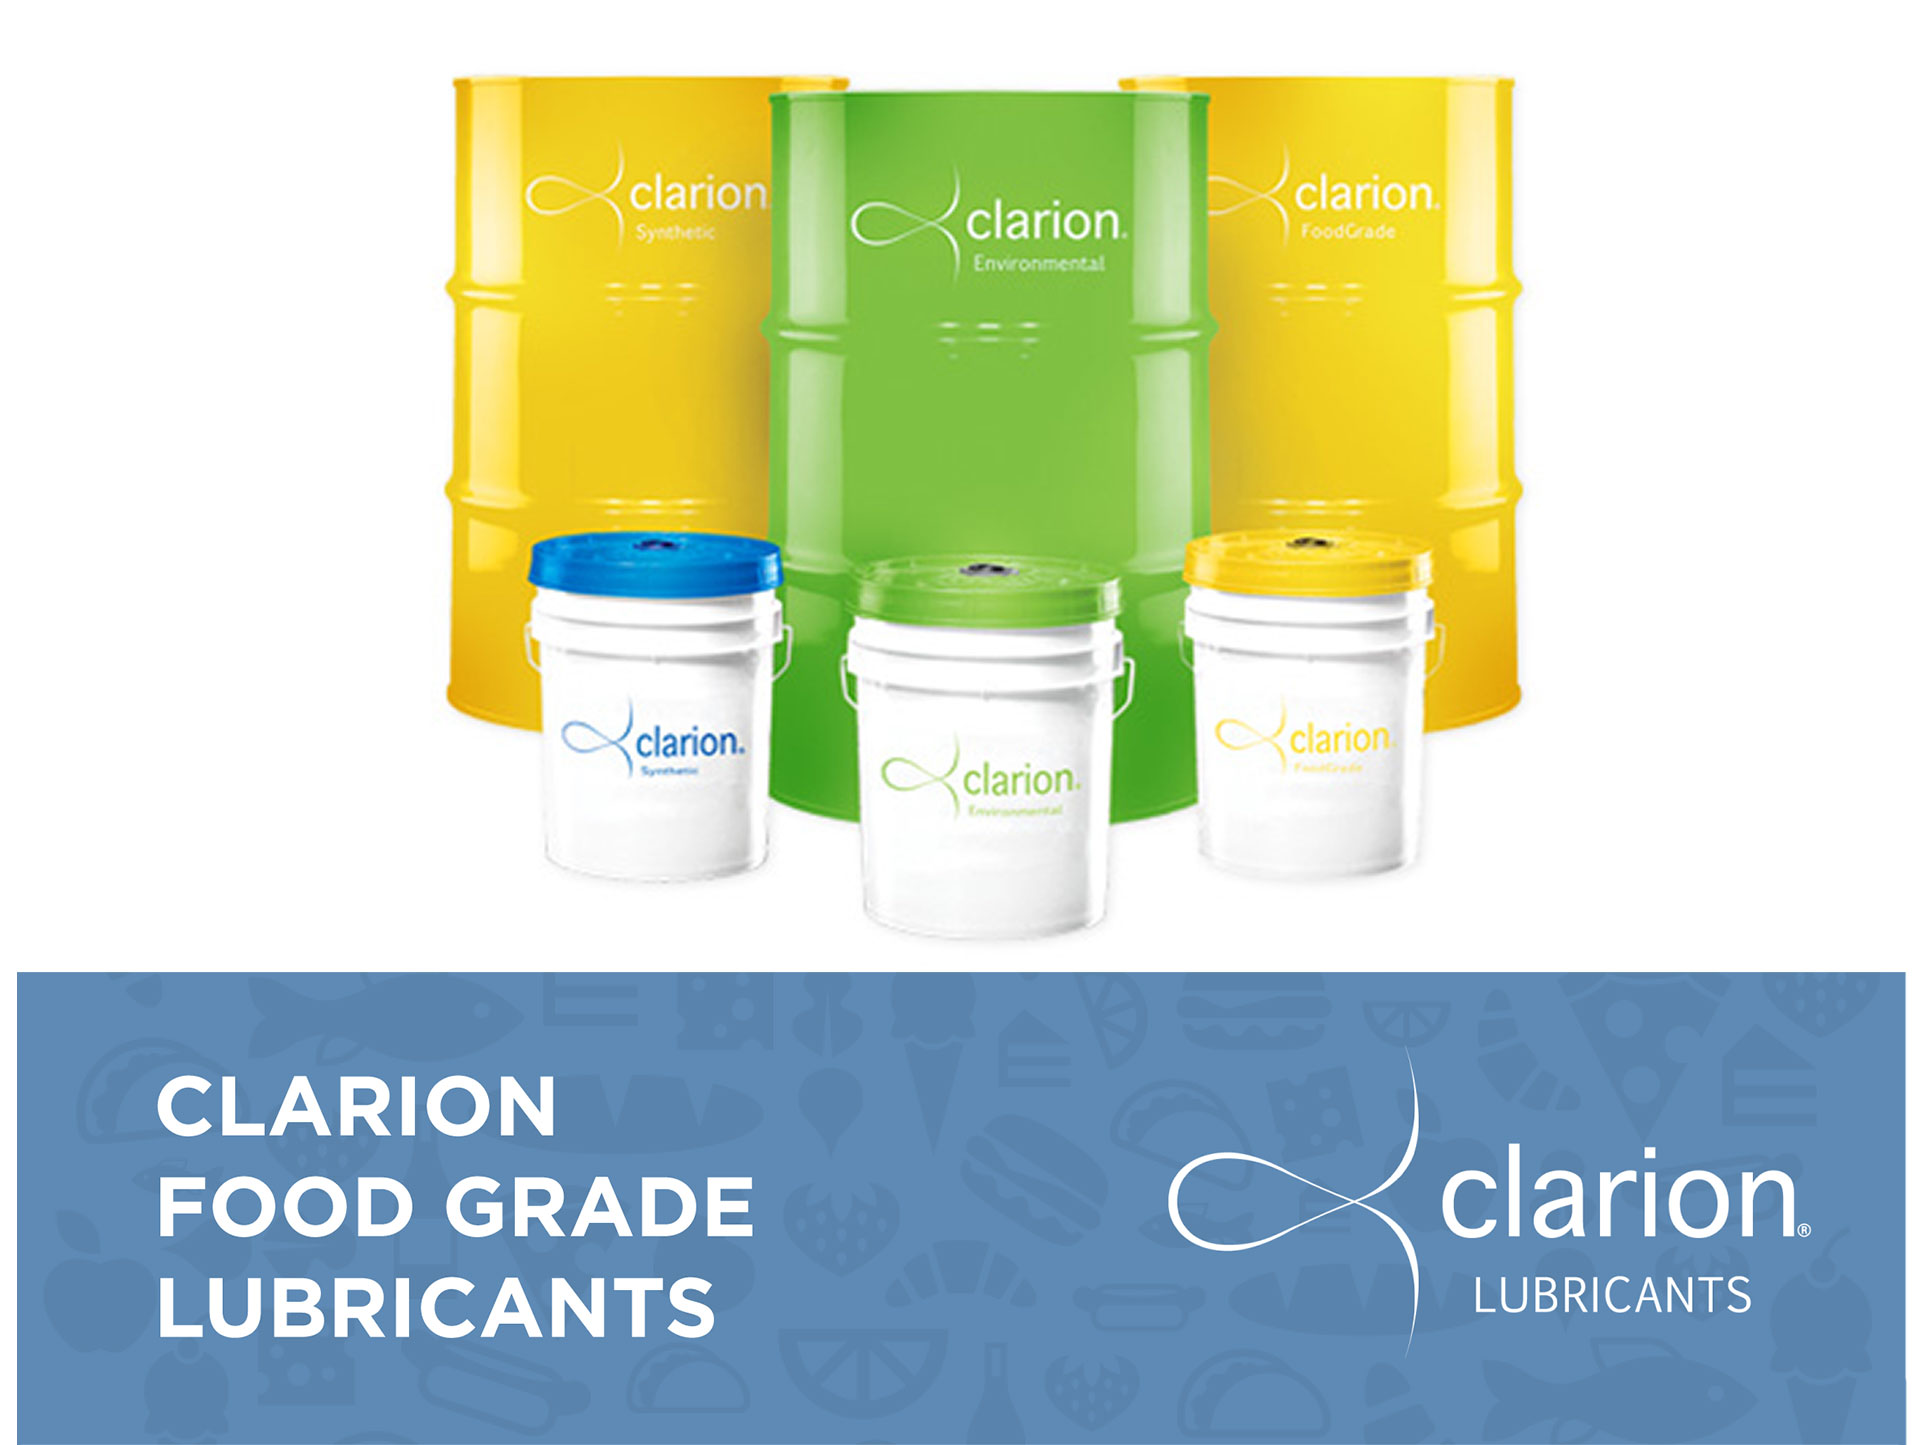 Clarion-food-grade-lubricants-image-sutton